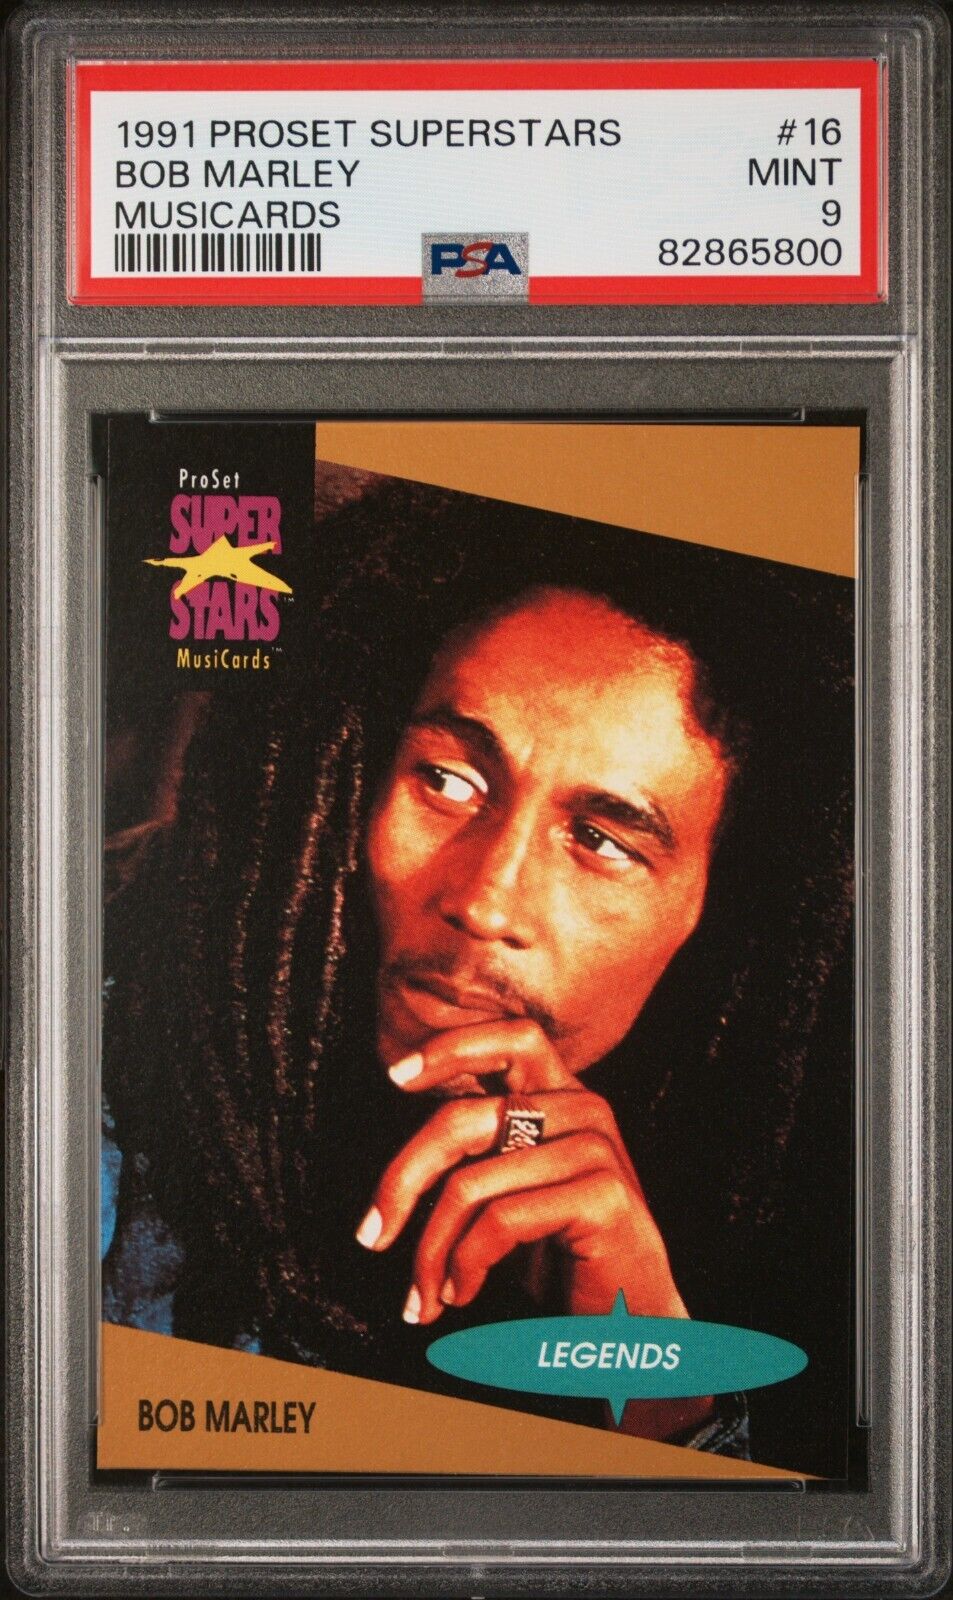 1991 Proset Superstars Bob Marley Musicards PSA 9 Graded MINT Card #16 RARE